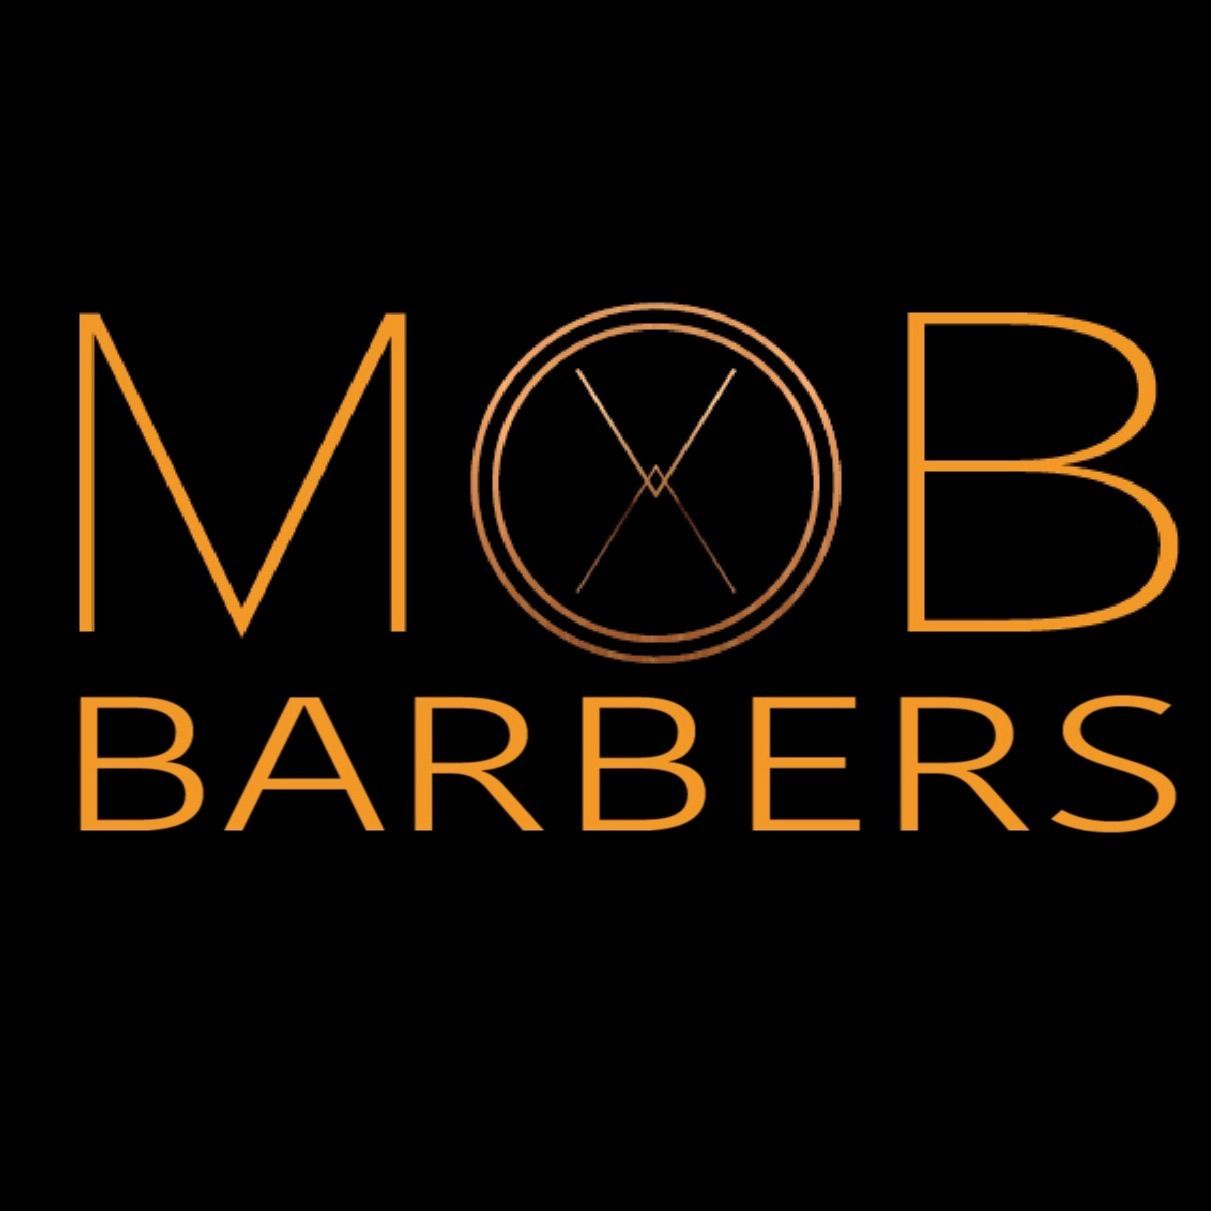 The Mob Club Barbers, Unit 1, 28 Rear Virginia Street, PR8 6RZ, Southport